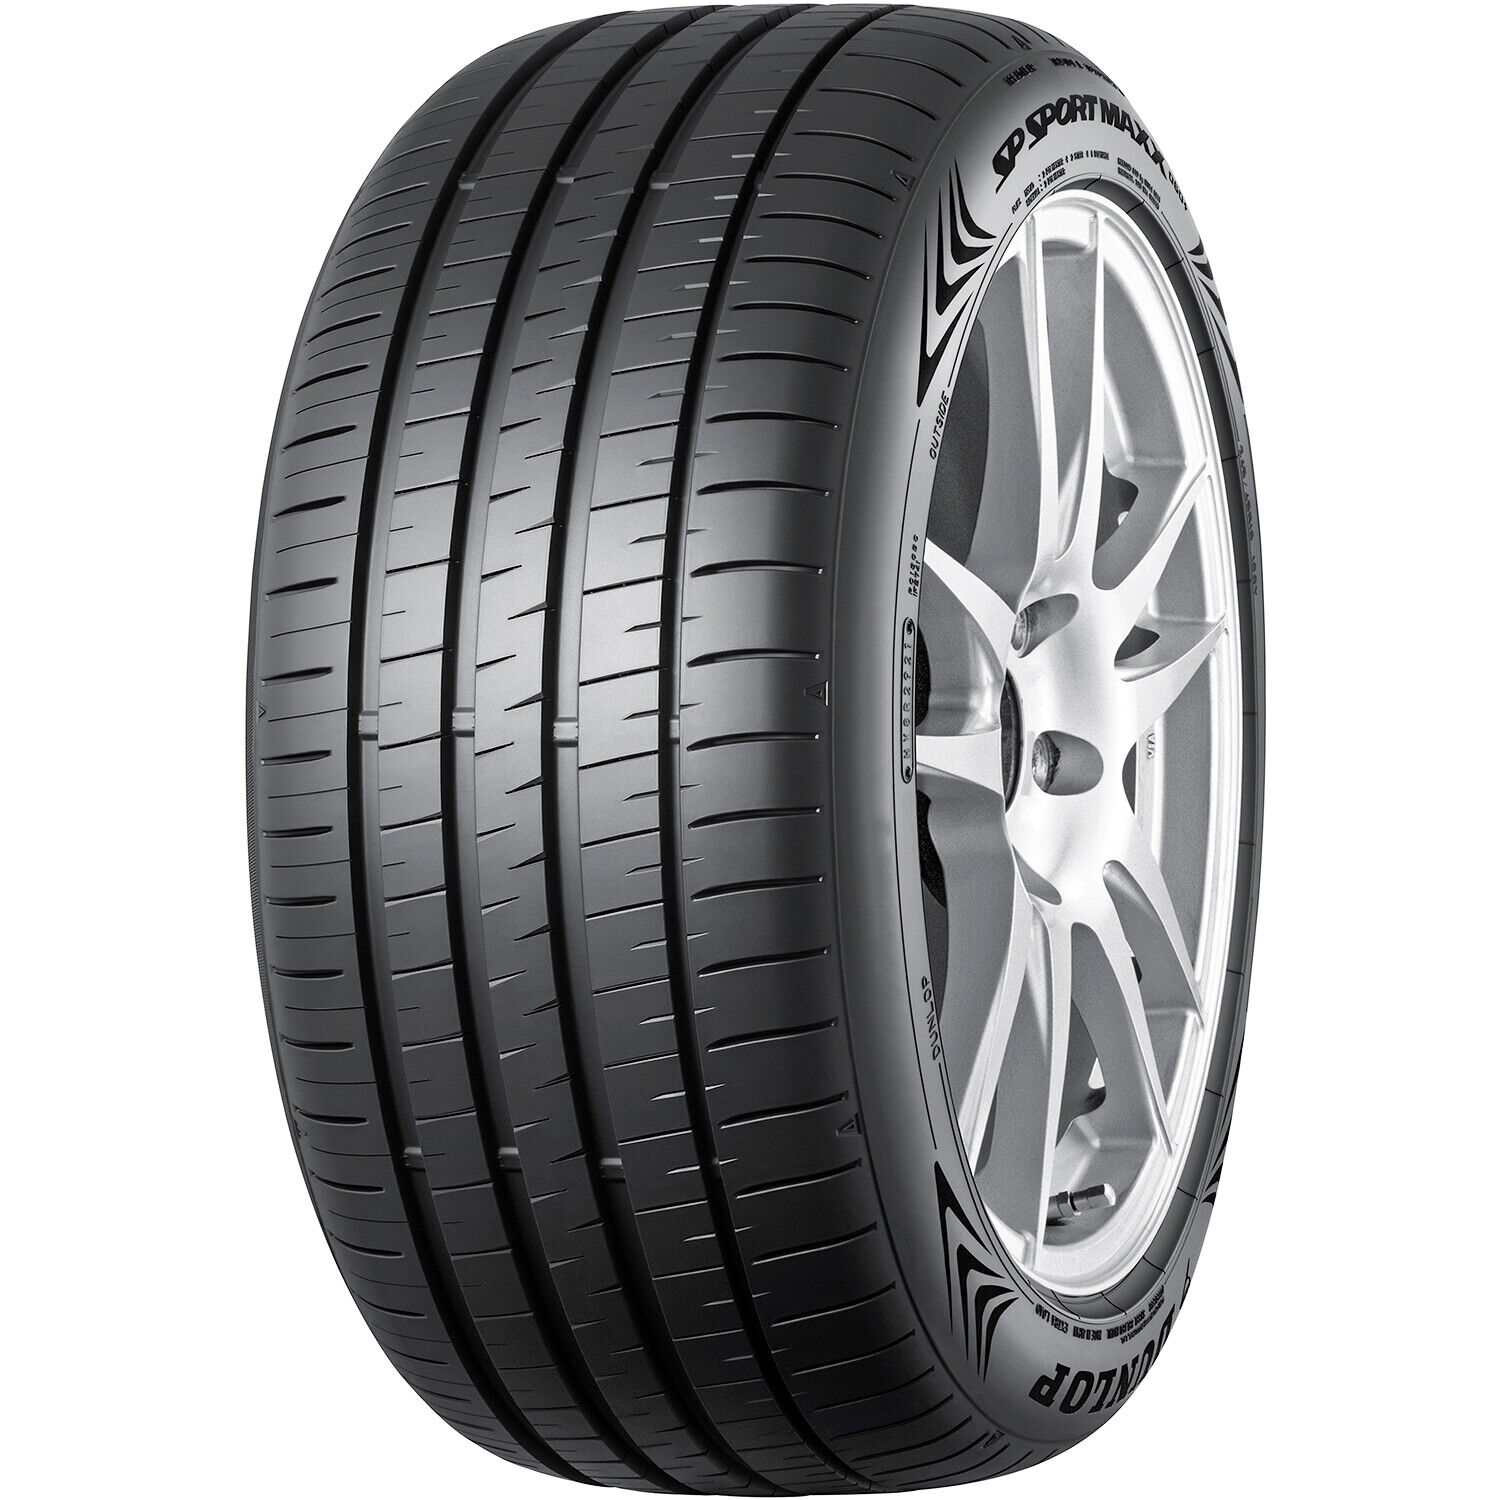 Tire Dunlop SP Sport Maxx 060+ 265/35R18 97Y XL High Performance